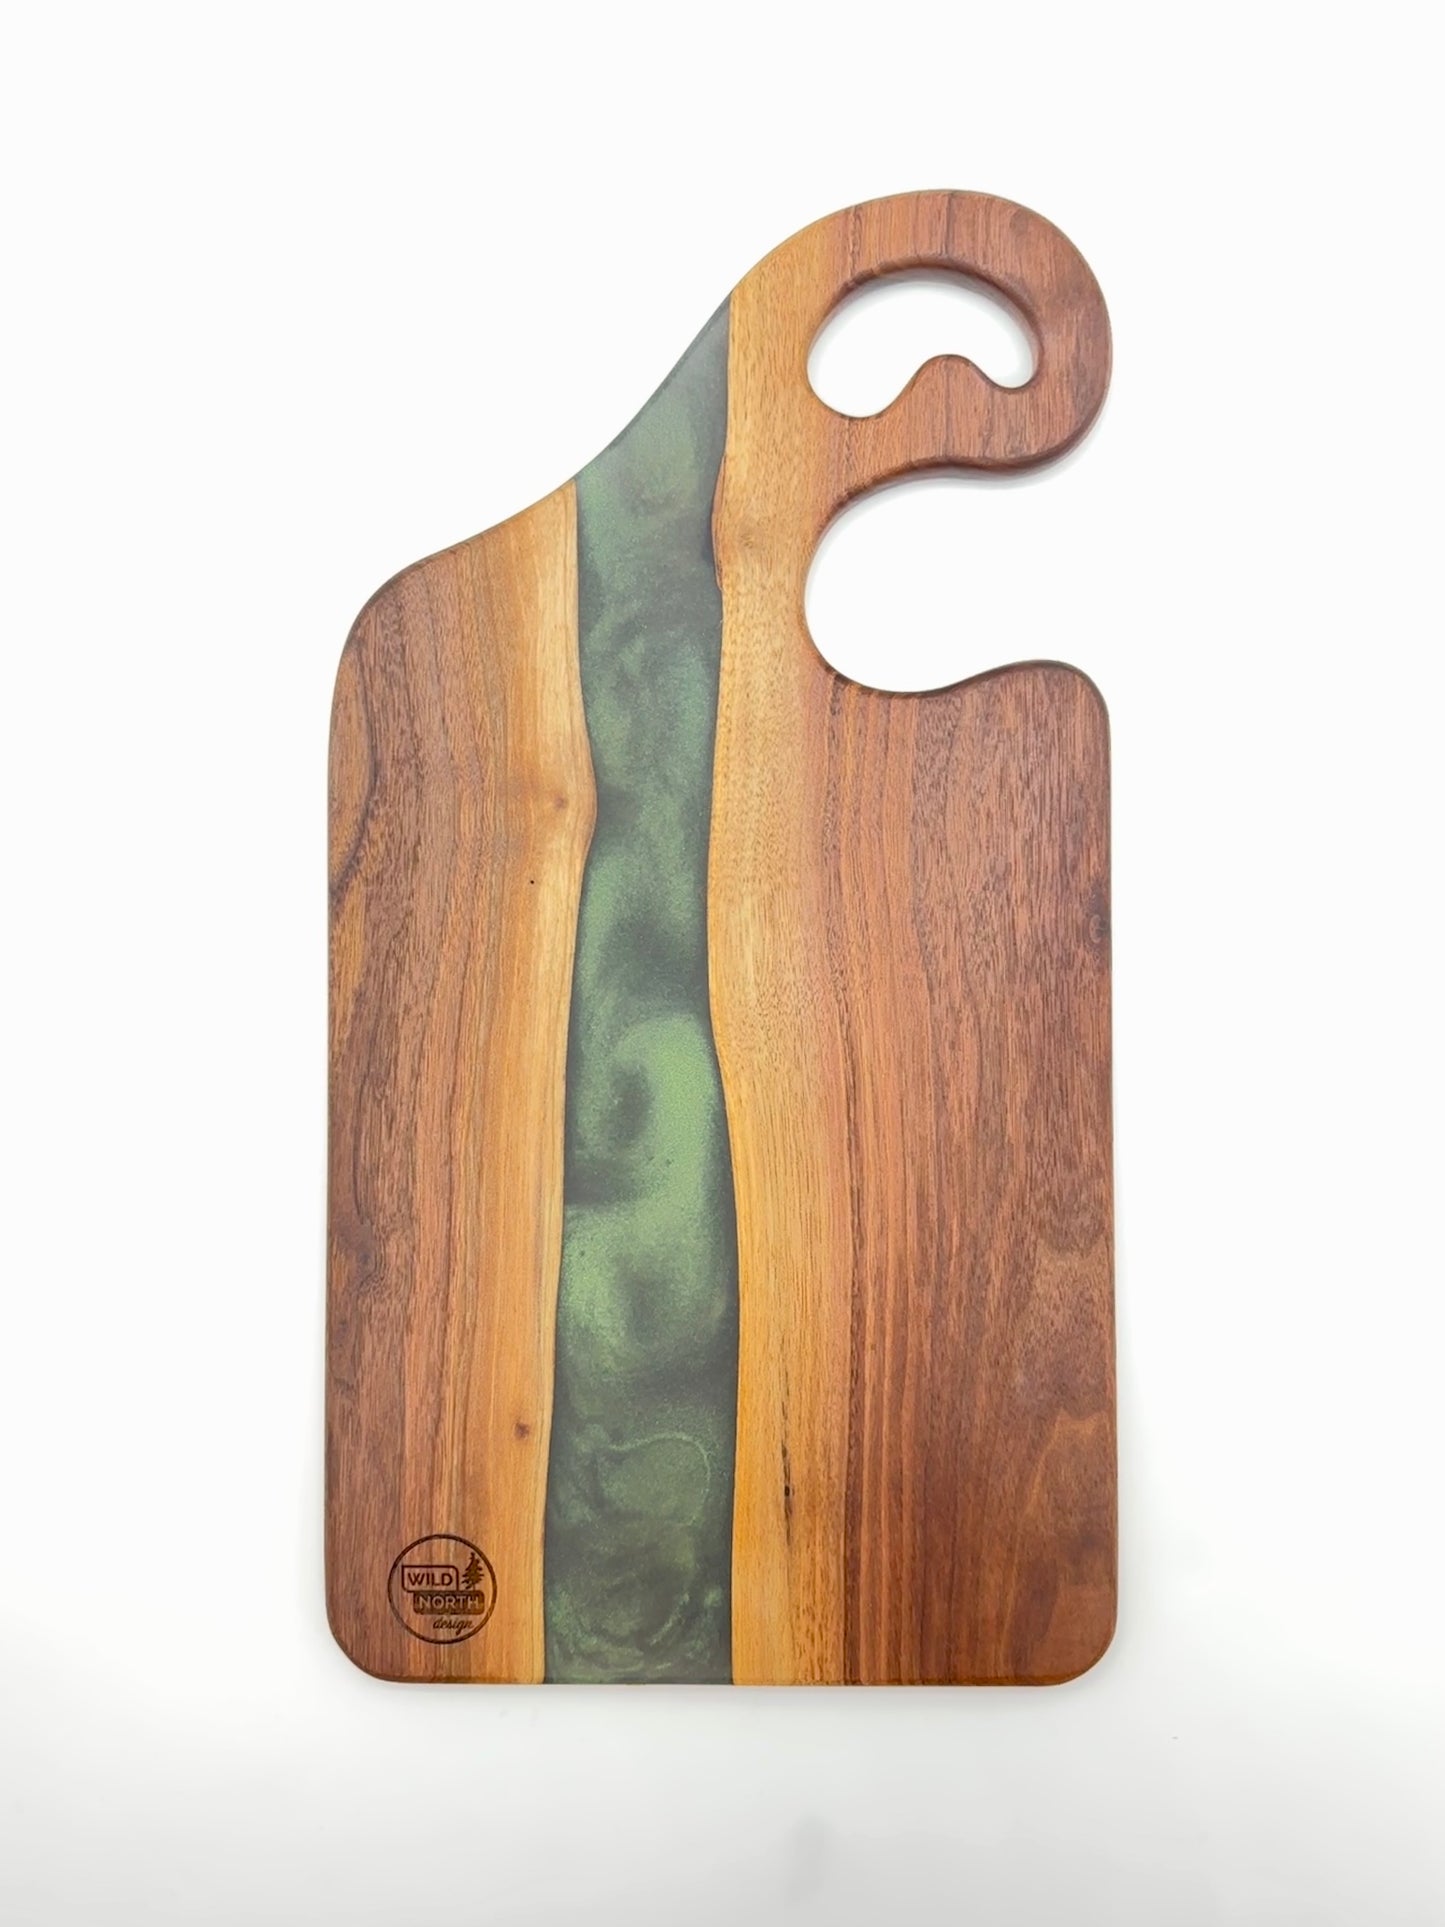 Walnut board with Green resin